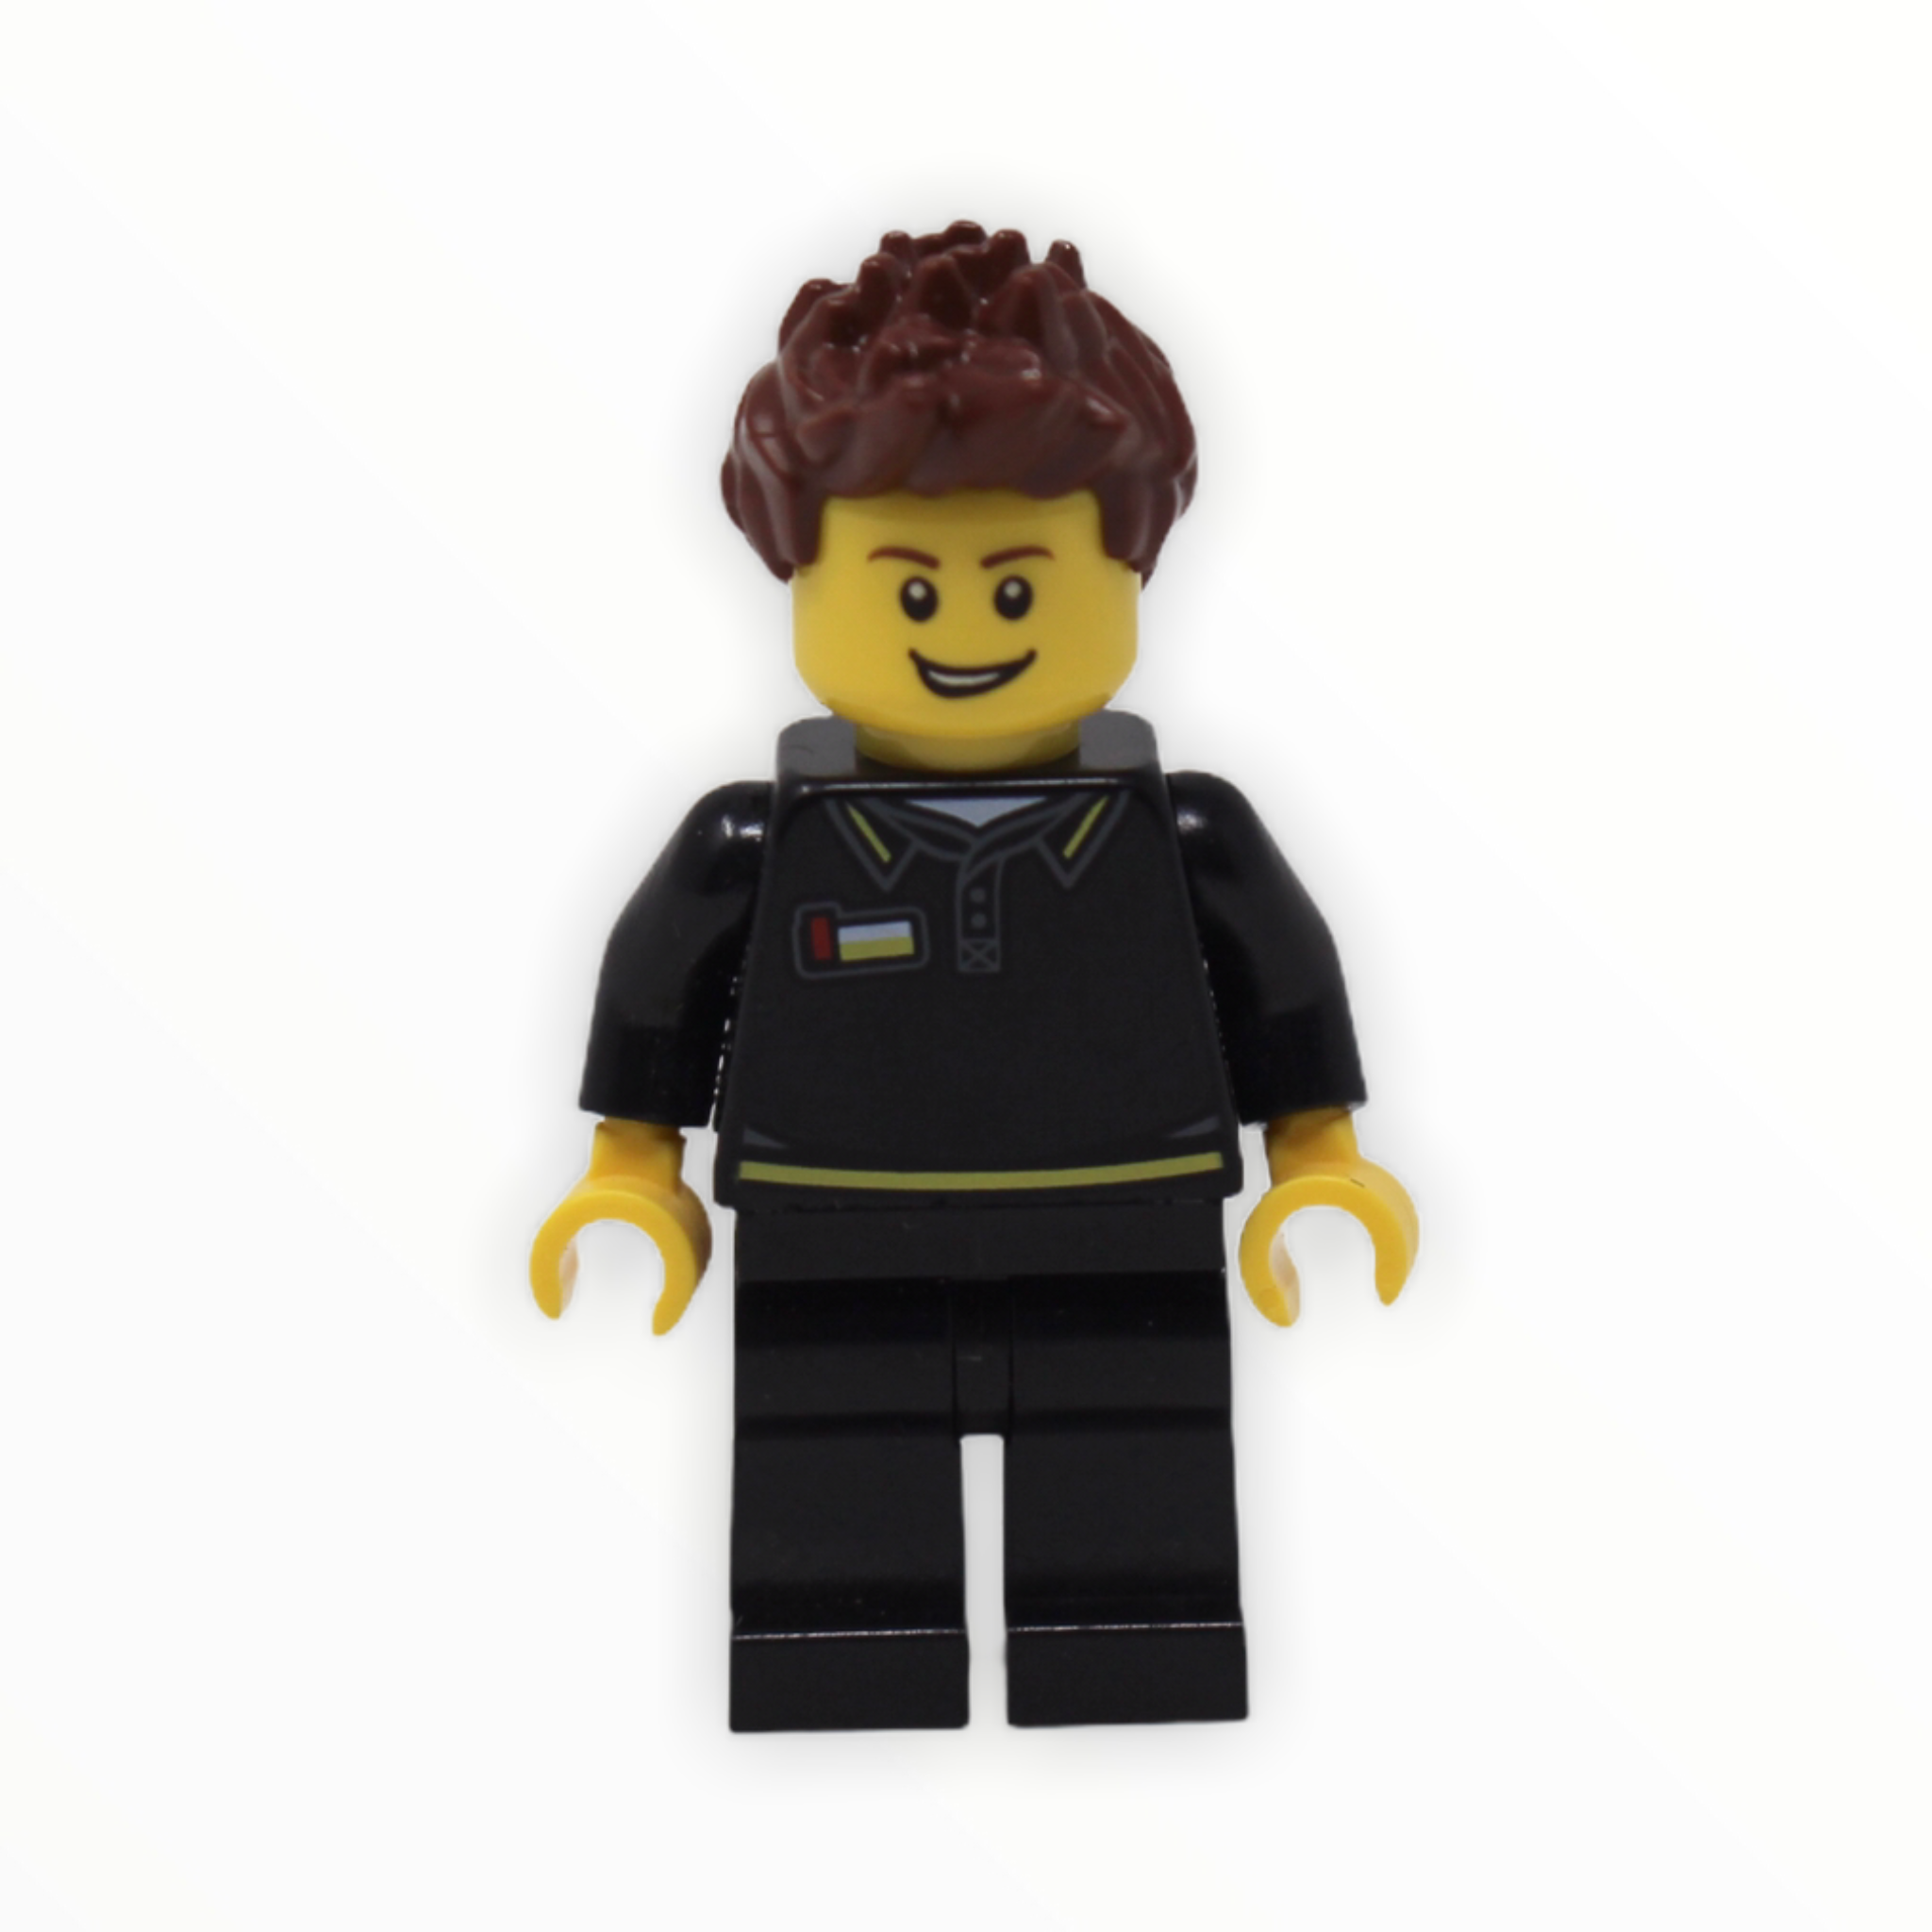 LEGO Store Employee (2017, black shirt)